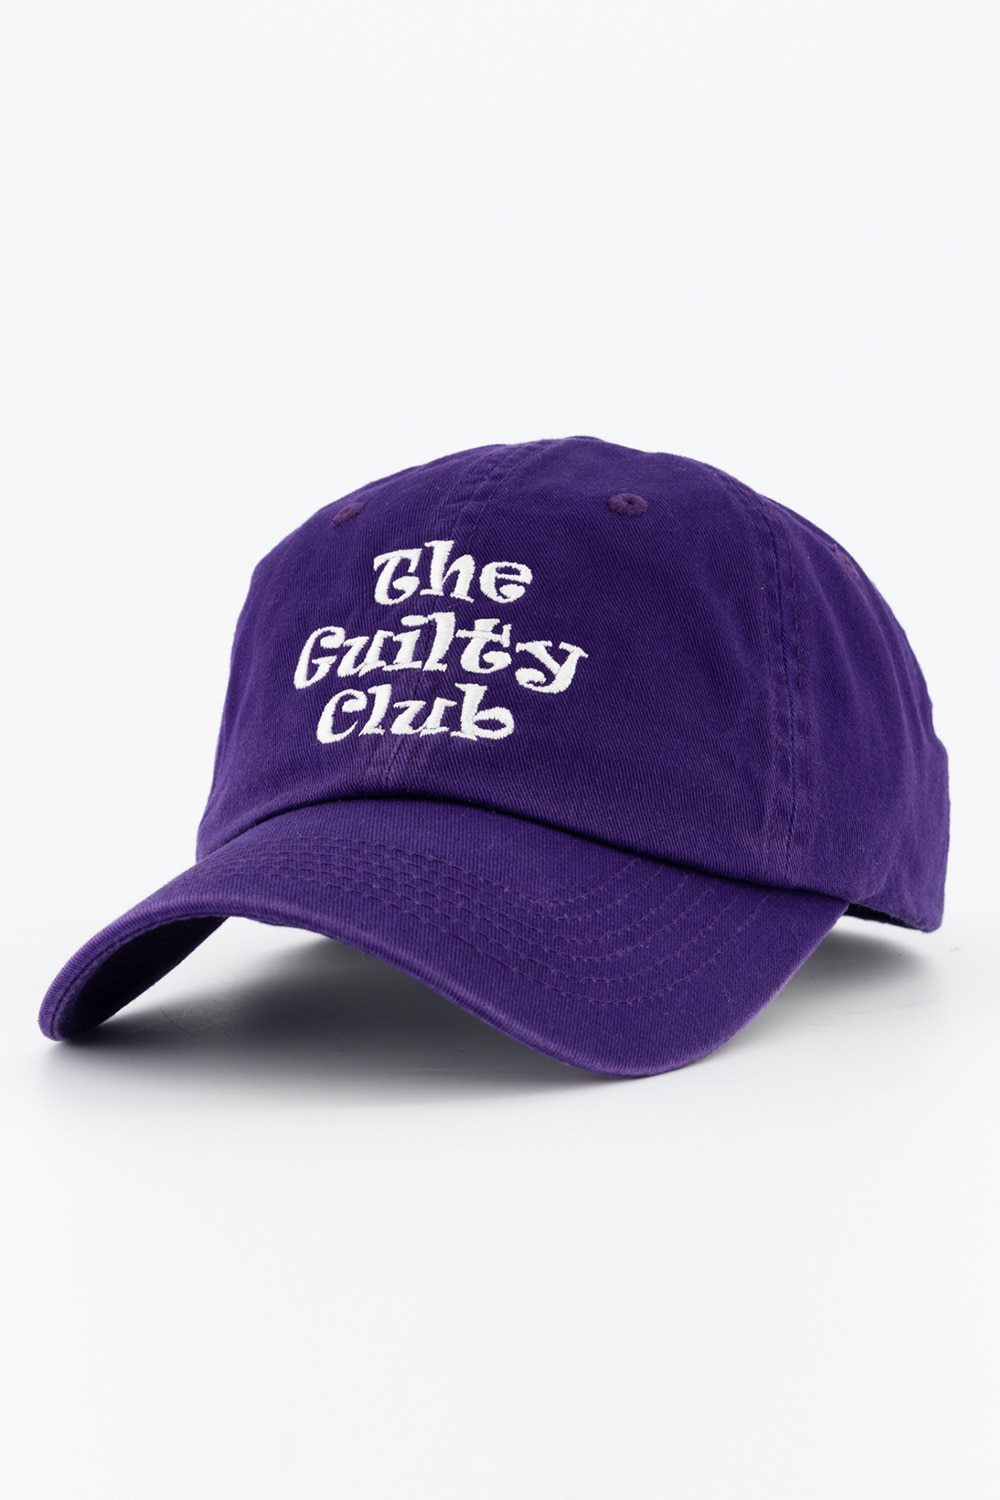 THE GUILTY CLUB  Ball Cap Purple